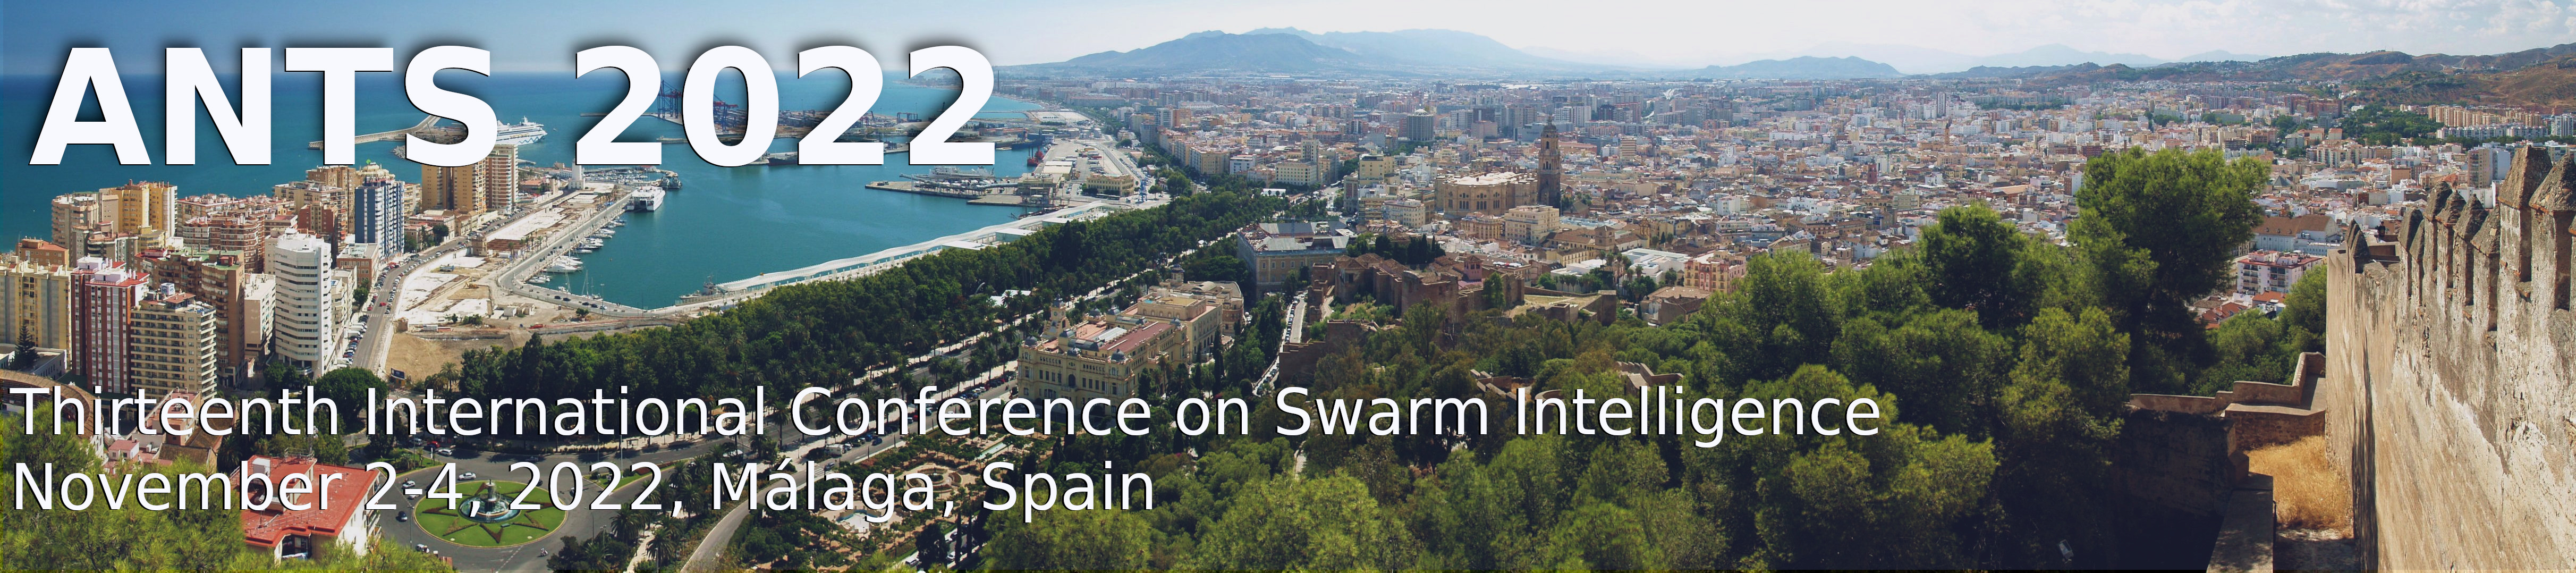 ANTS 2022, Thirteenth International Conference on Swarm Intelligence, November 2-4, 2022, Málaga, Spain